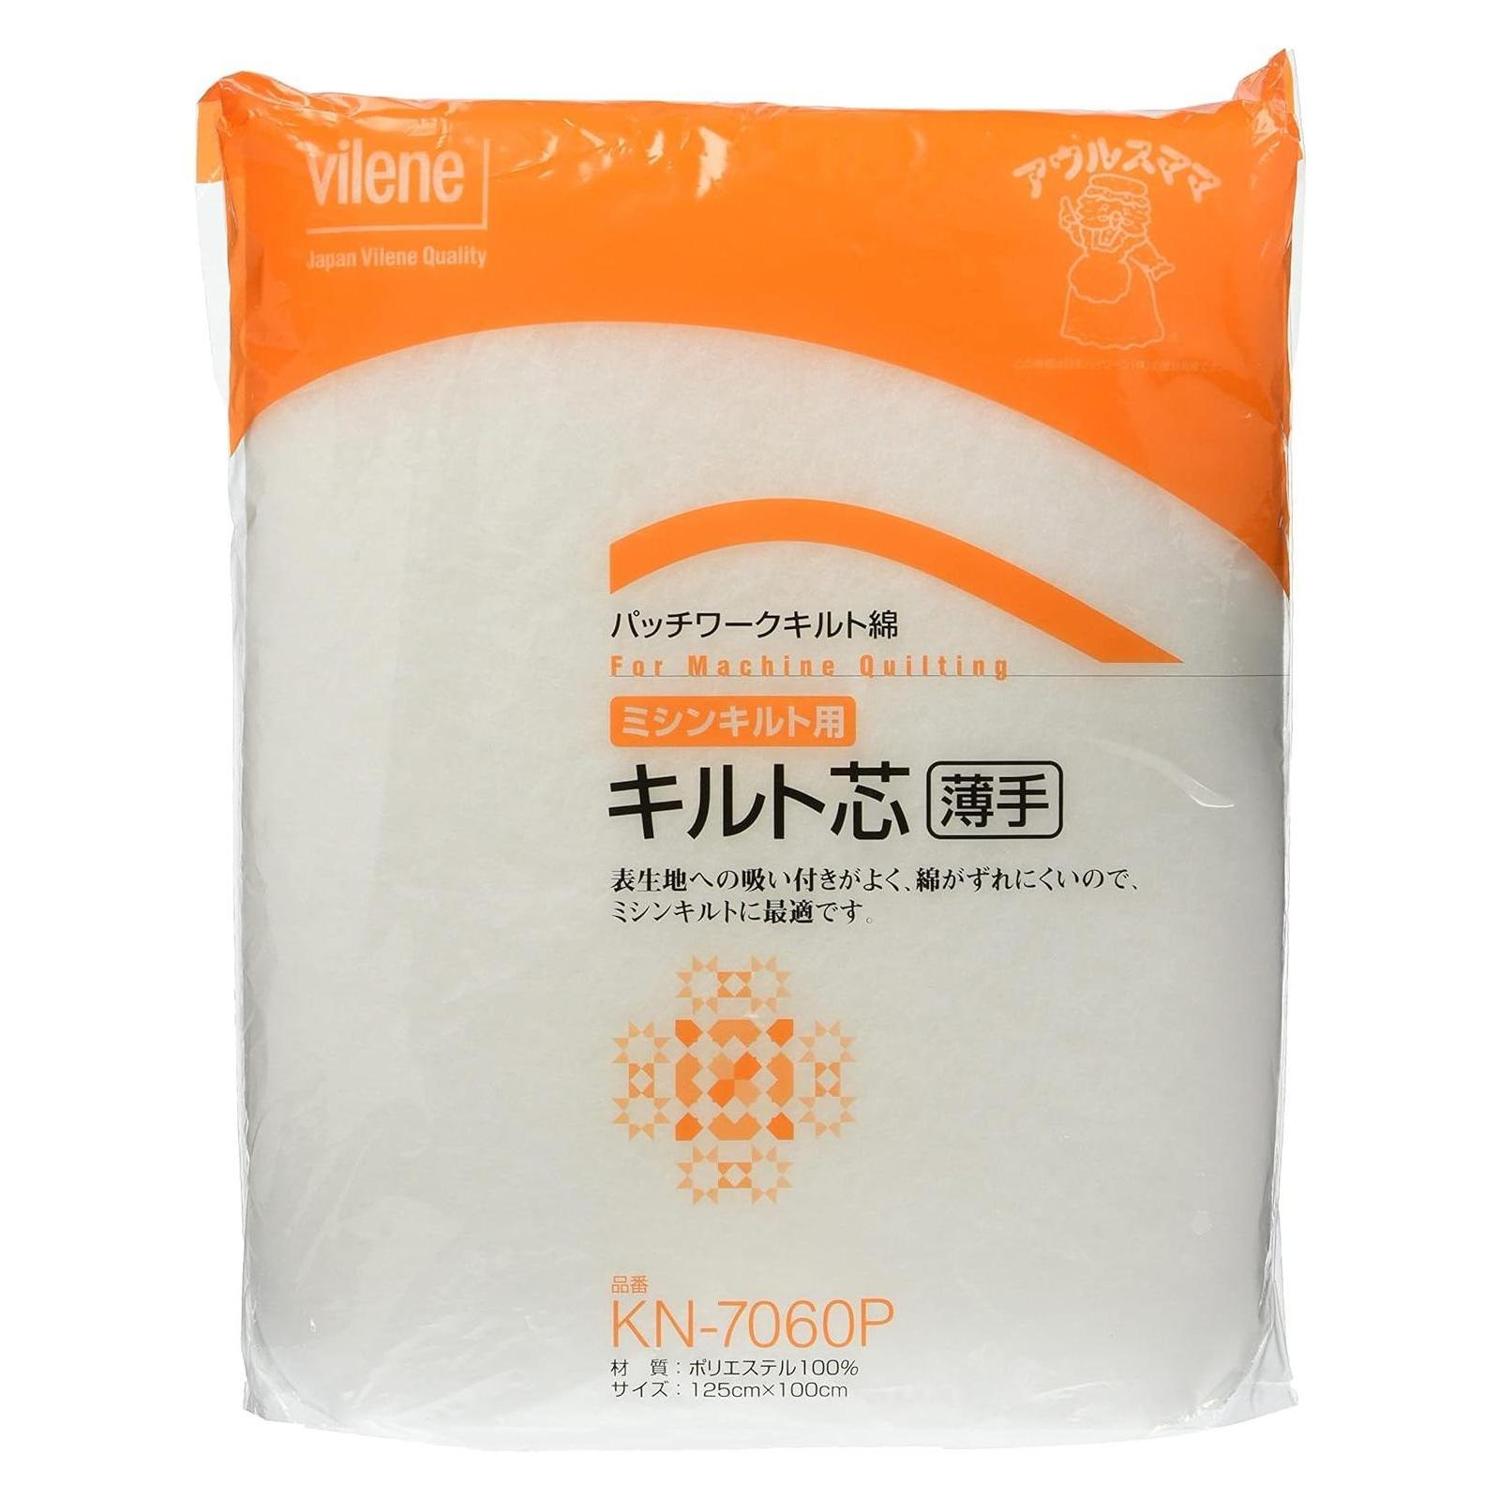 KN-7060P Bilene Thin 125cm x 100cm White (bag)